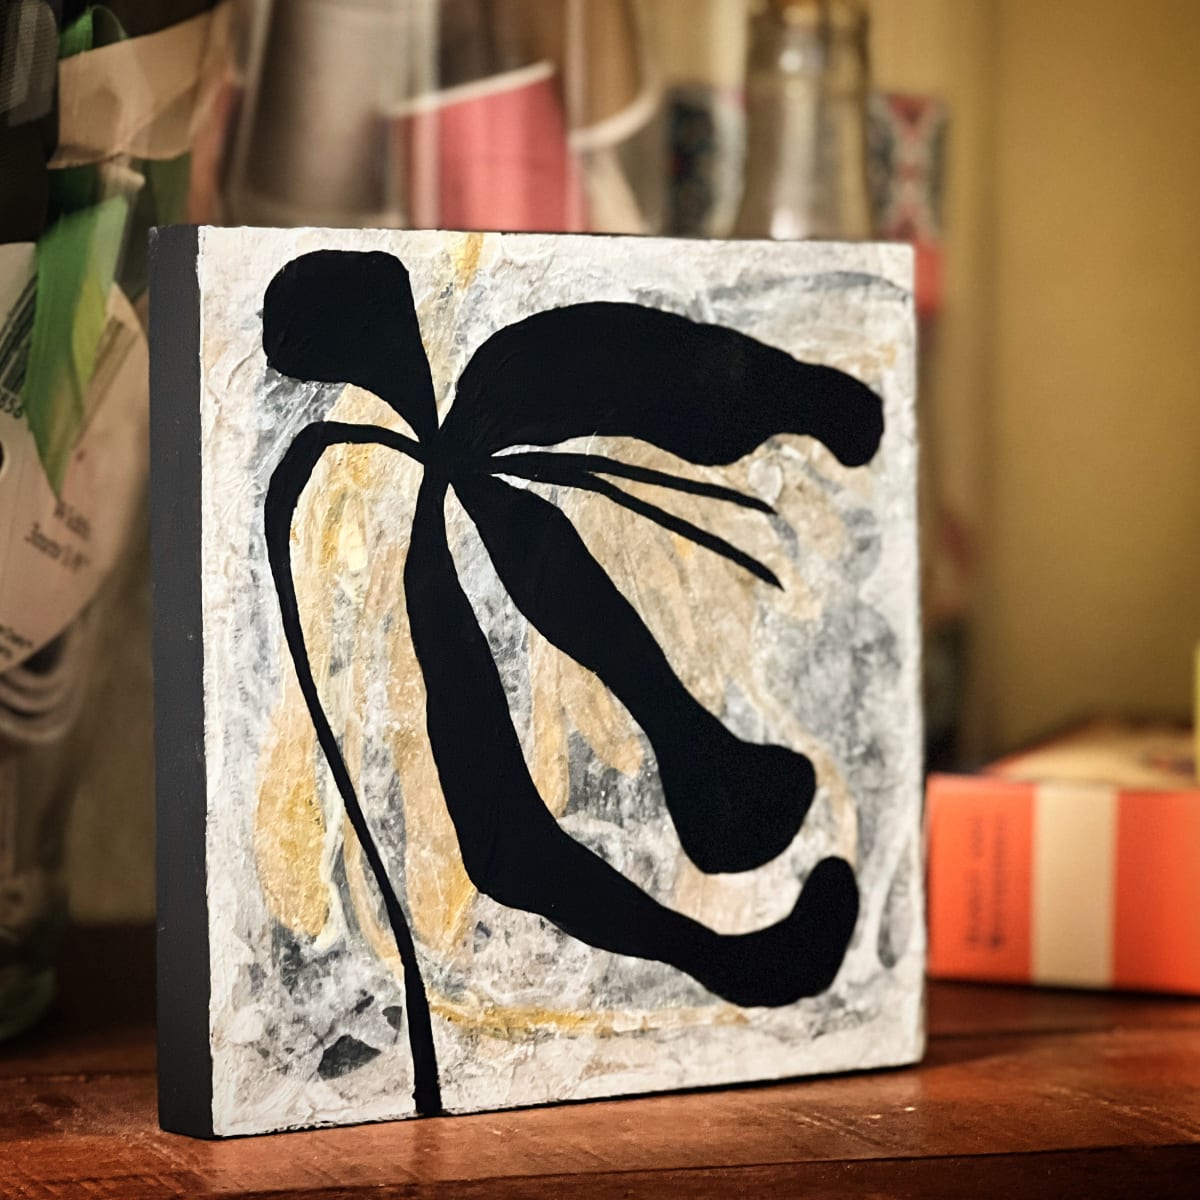 Vanilla by Cynthia Berg  Image: 6x6 acrylic on wood panel